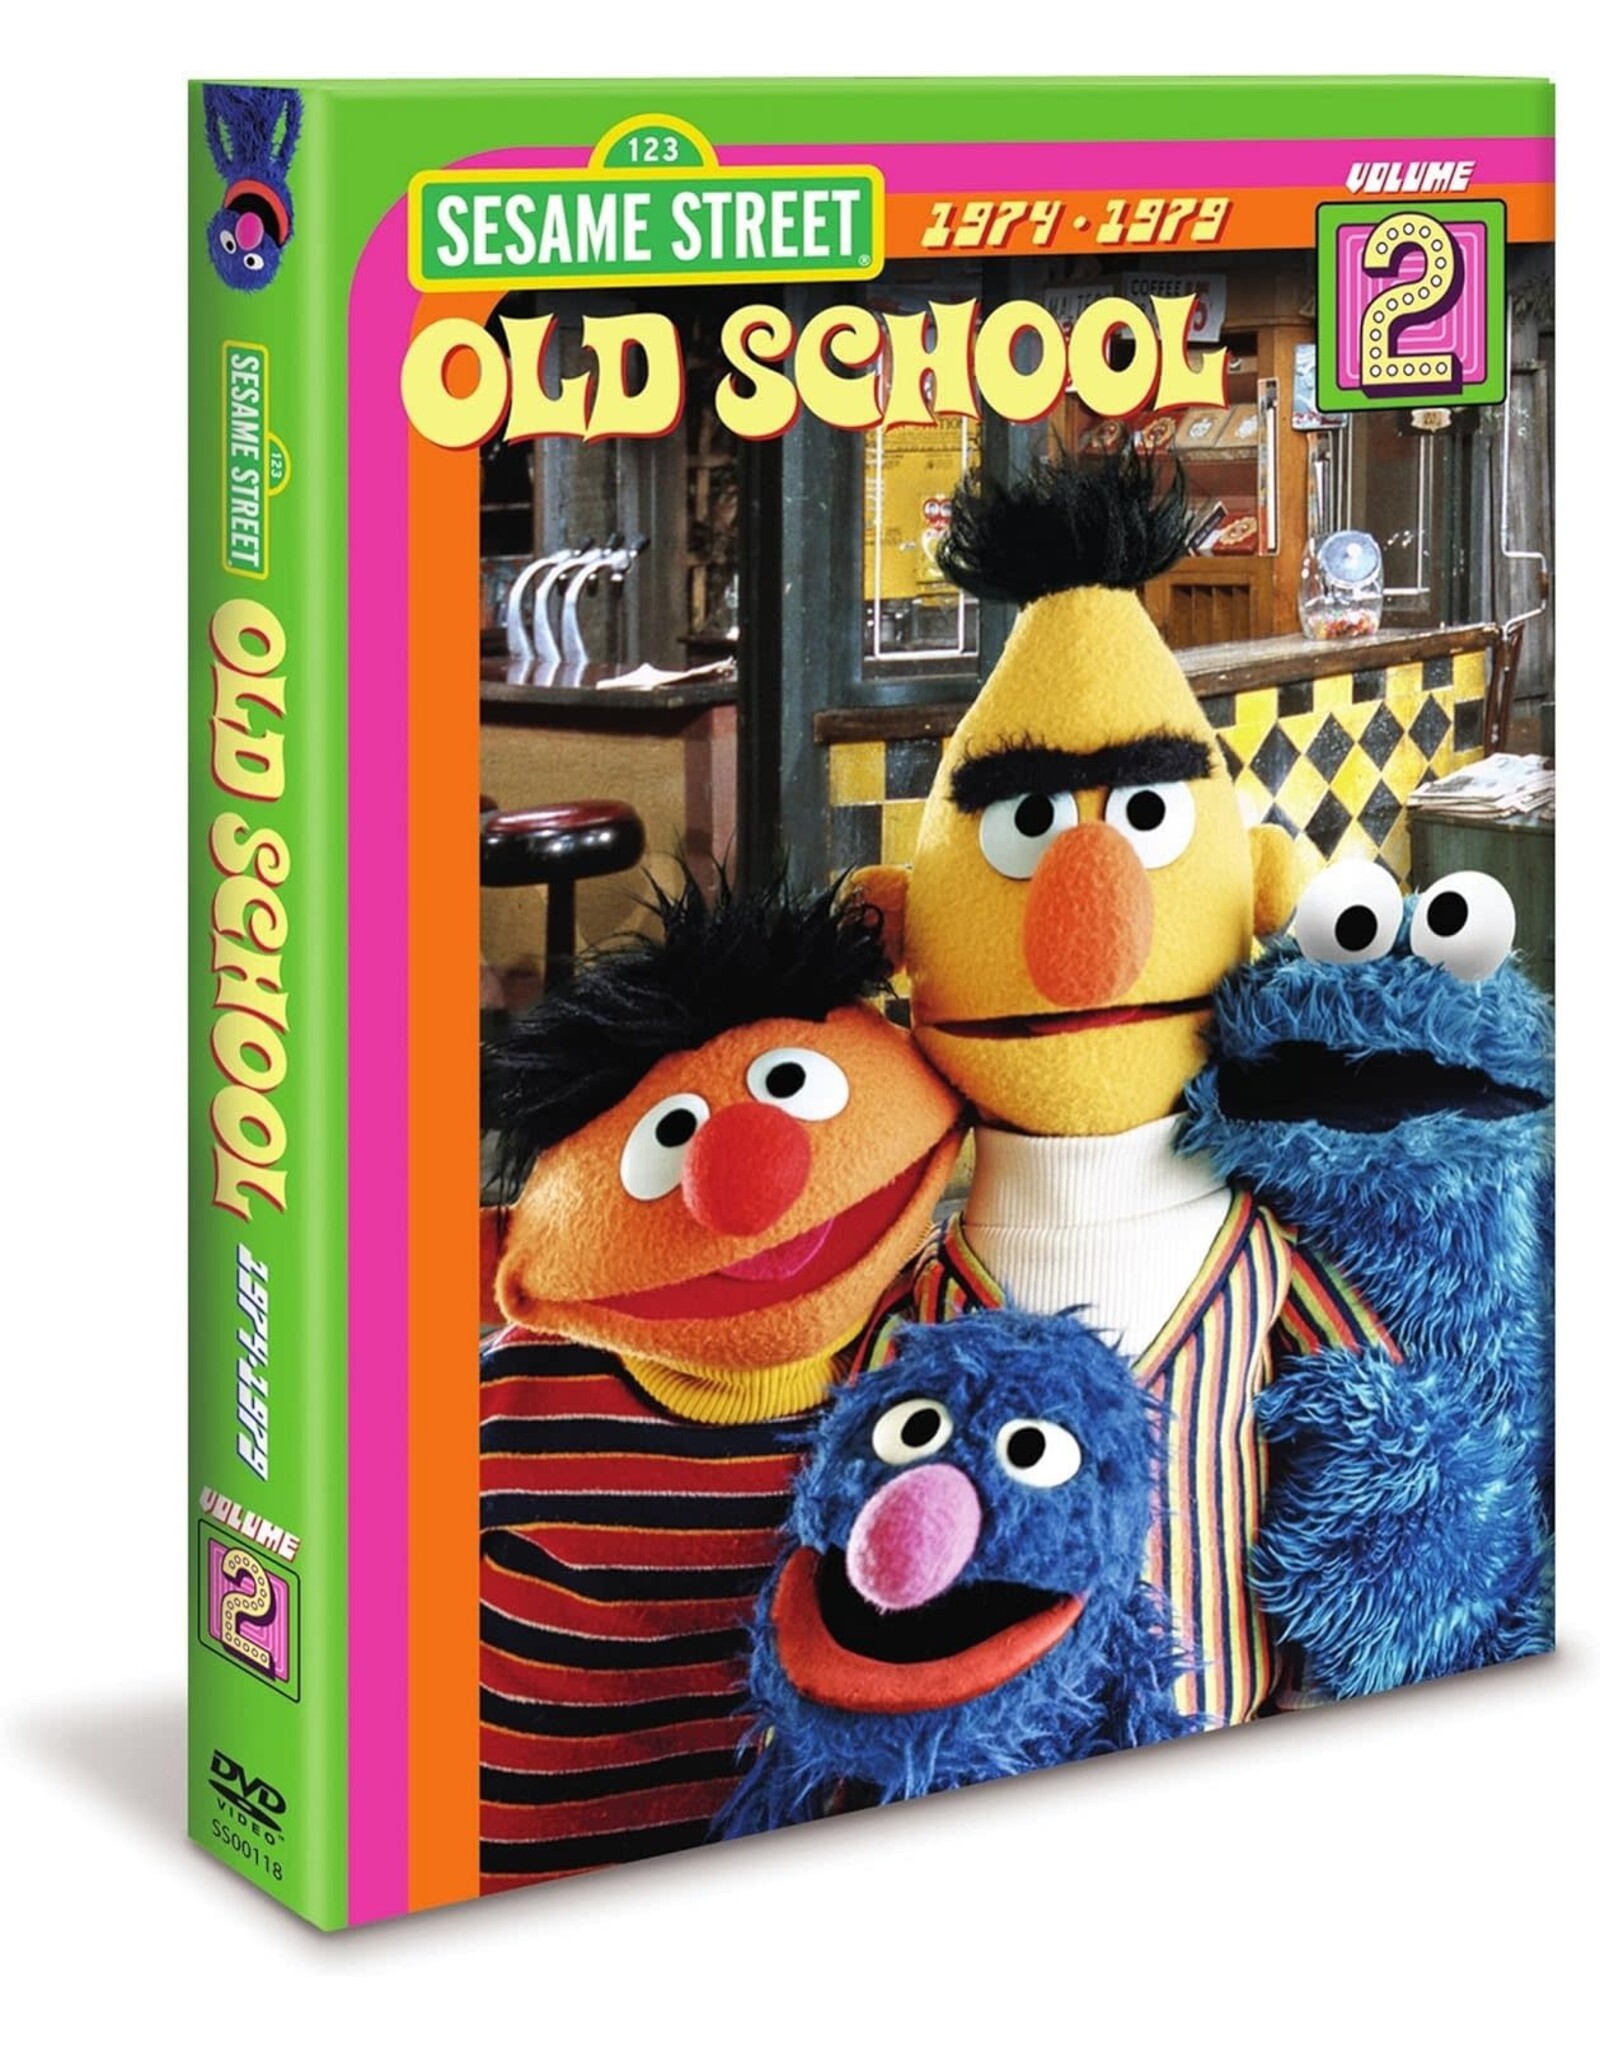 Cult & Cool Sesame Street Old School Volume 2 1974 - 1979 (Used)